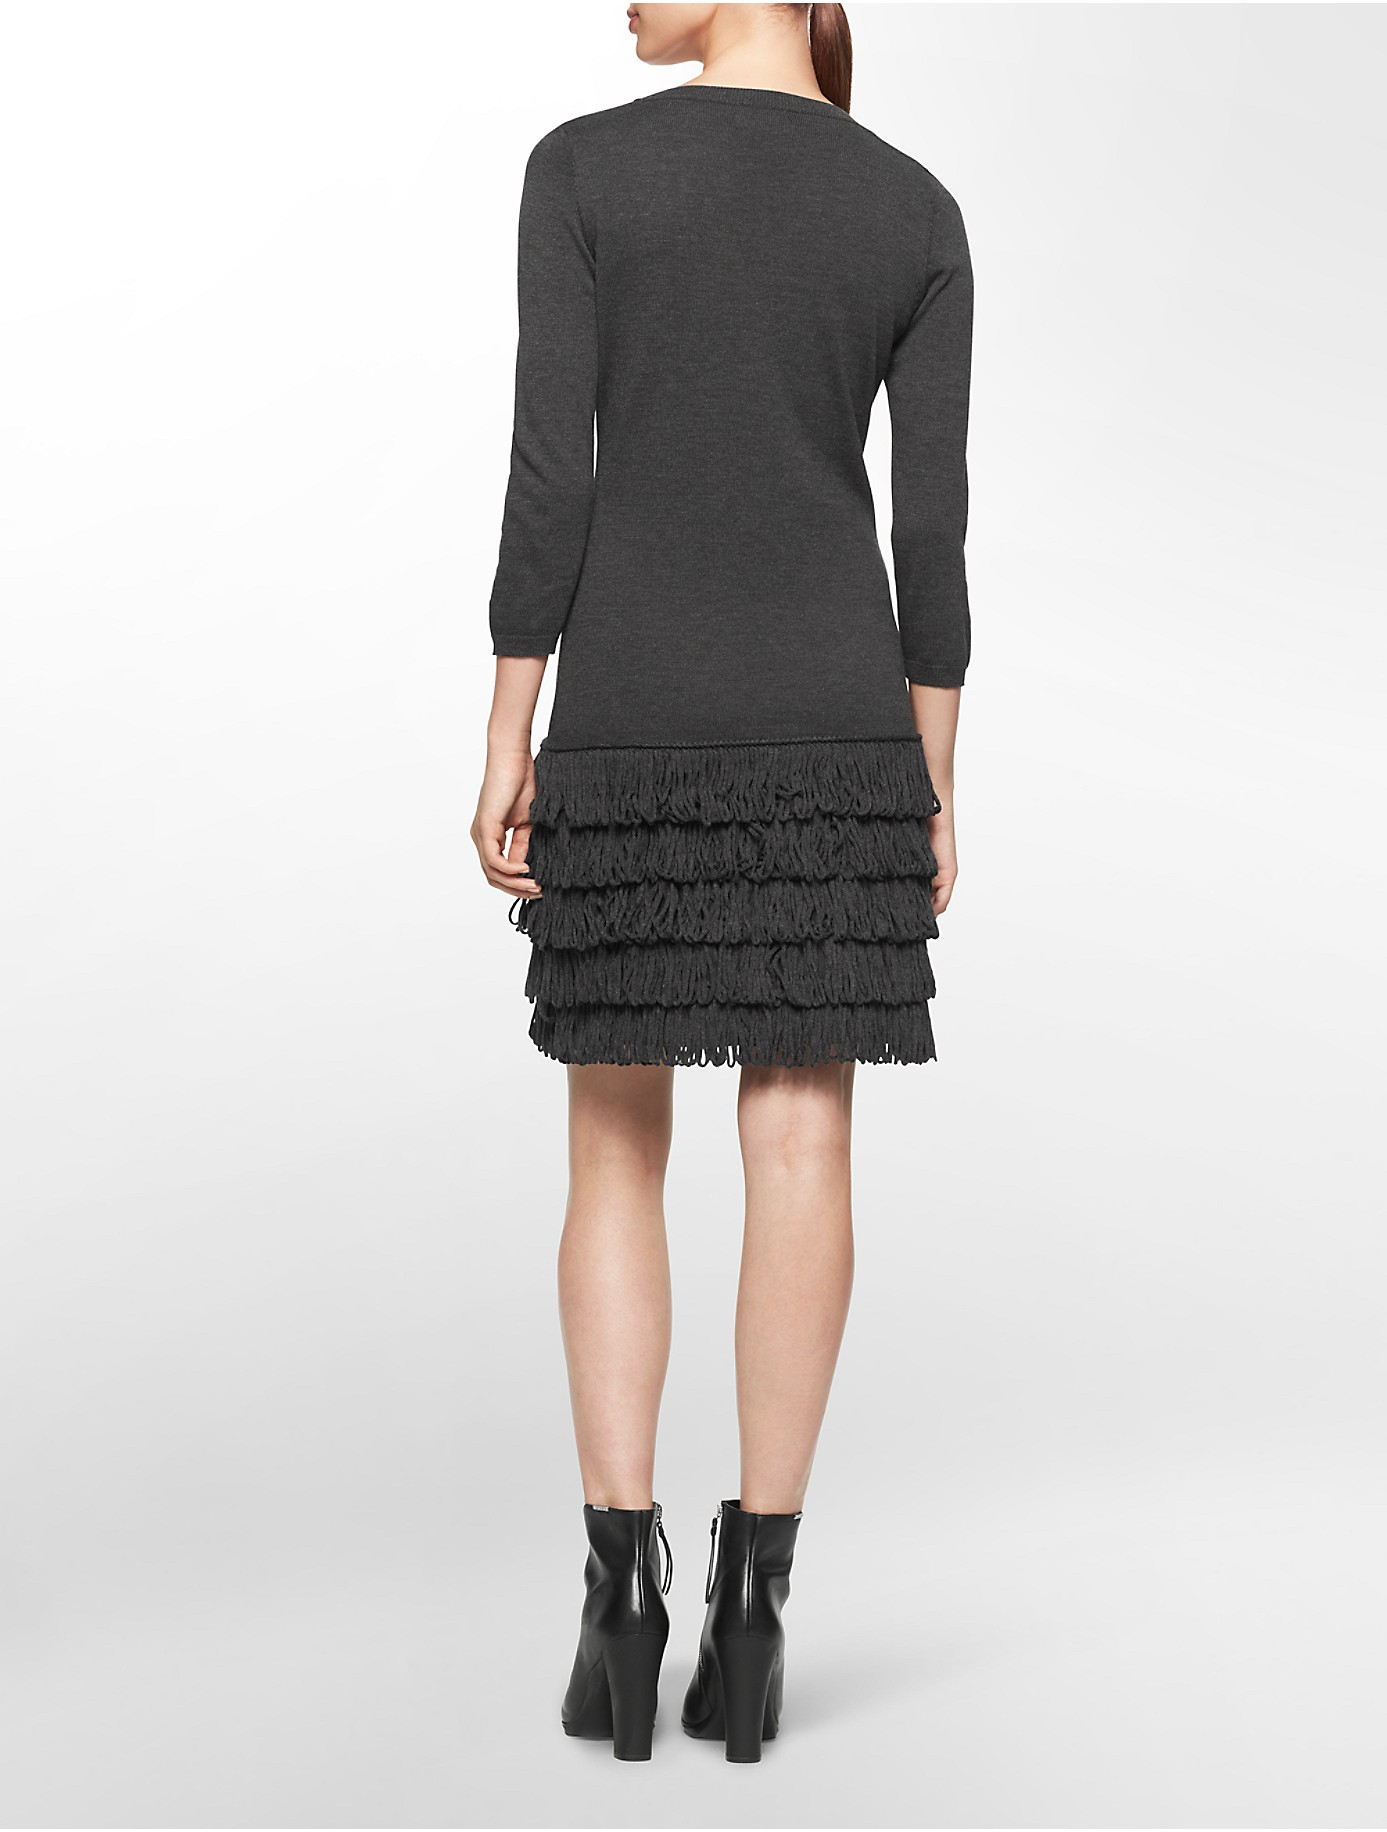 Calvin Klein White Label Fringe Hem 3/4 Sleeve Sweater Dress in Charcoal ( Grey) - Lyst